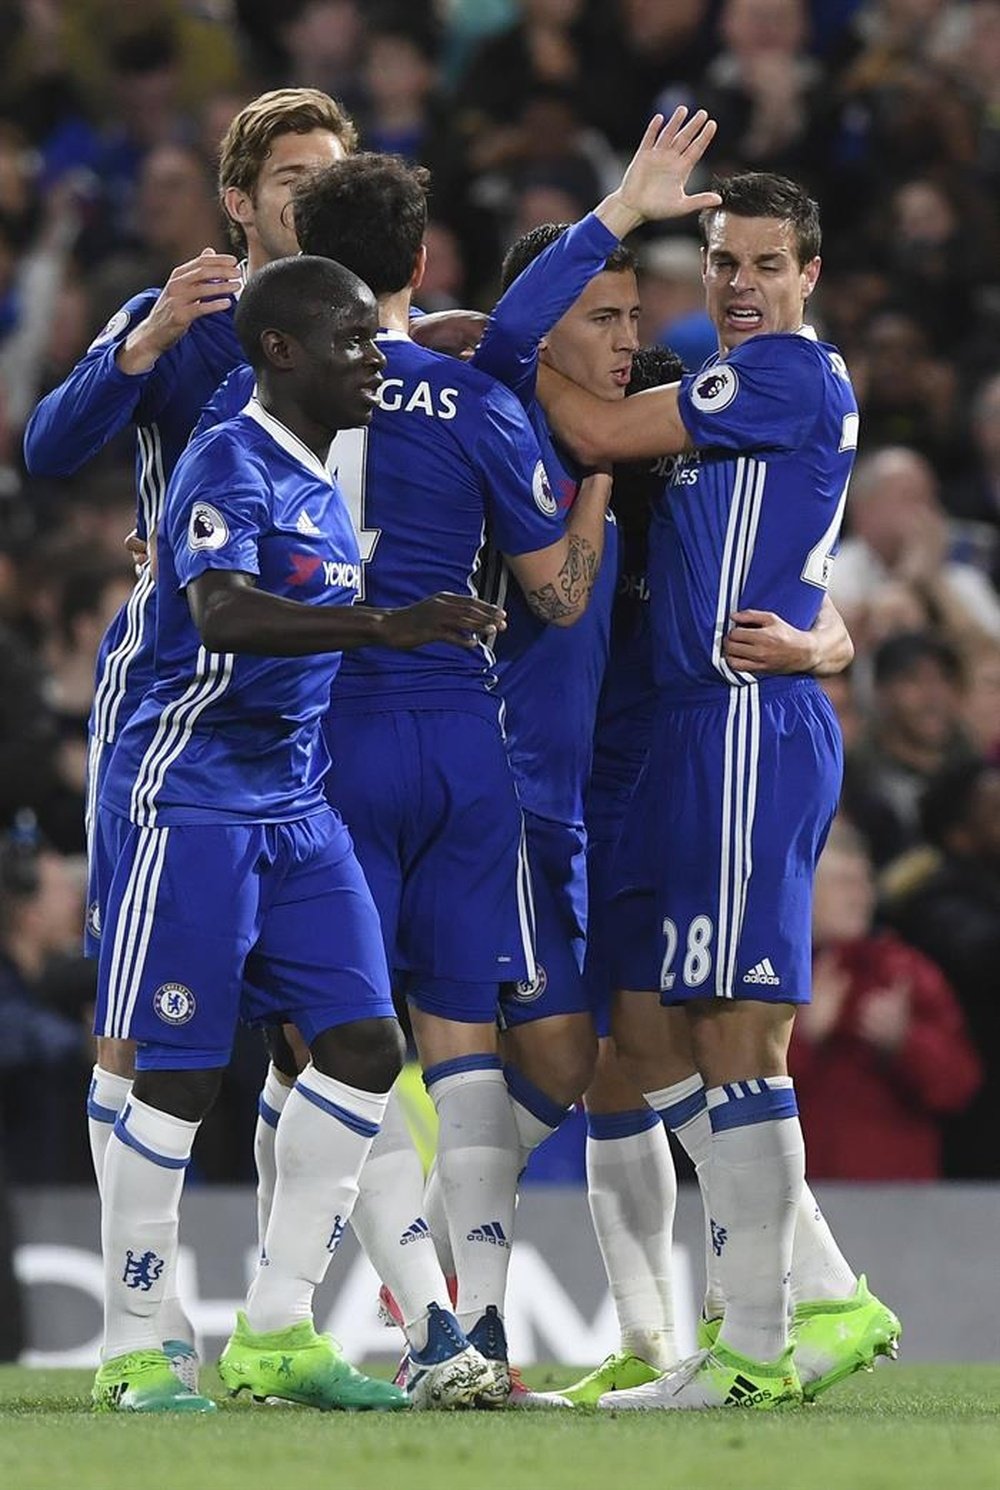 Hazard celebrates with his teammates after scoring a goal. EFE/Archivo